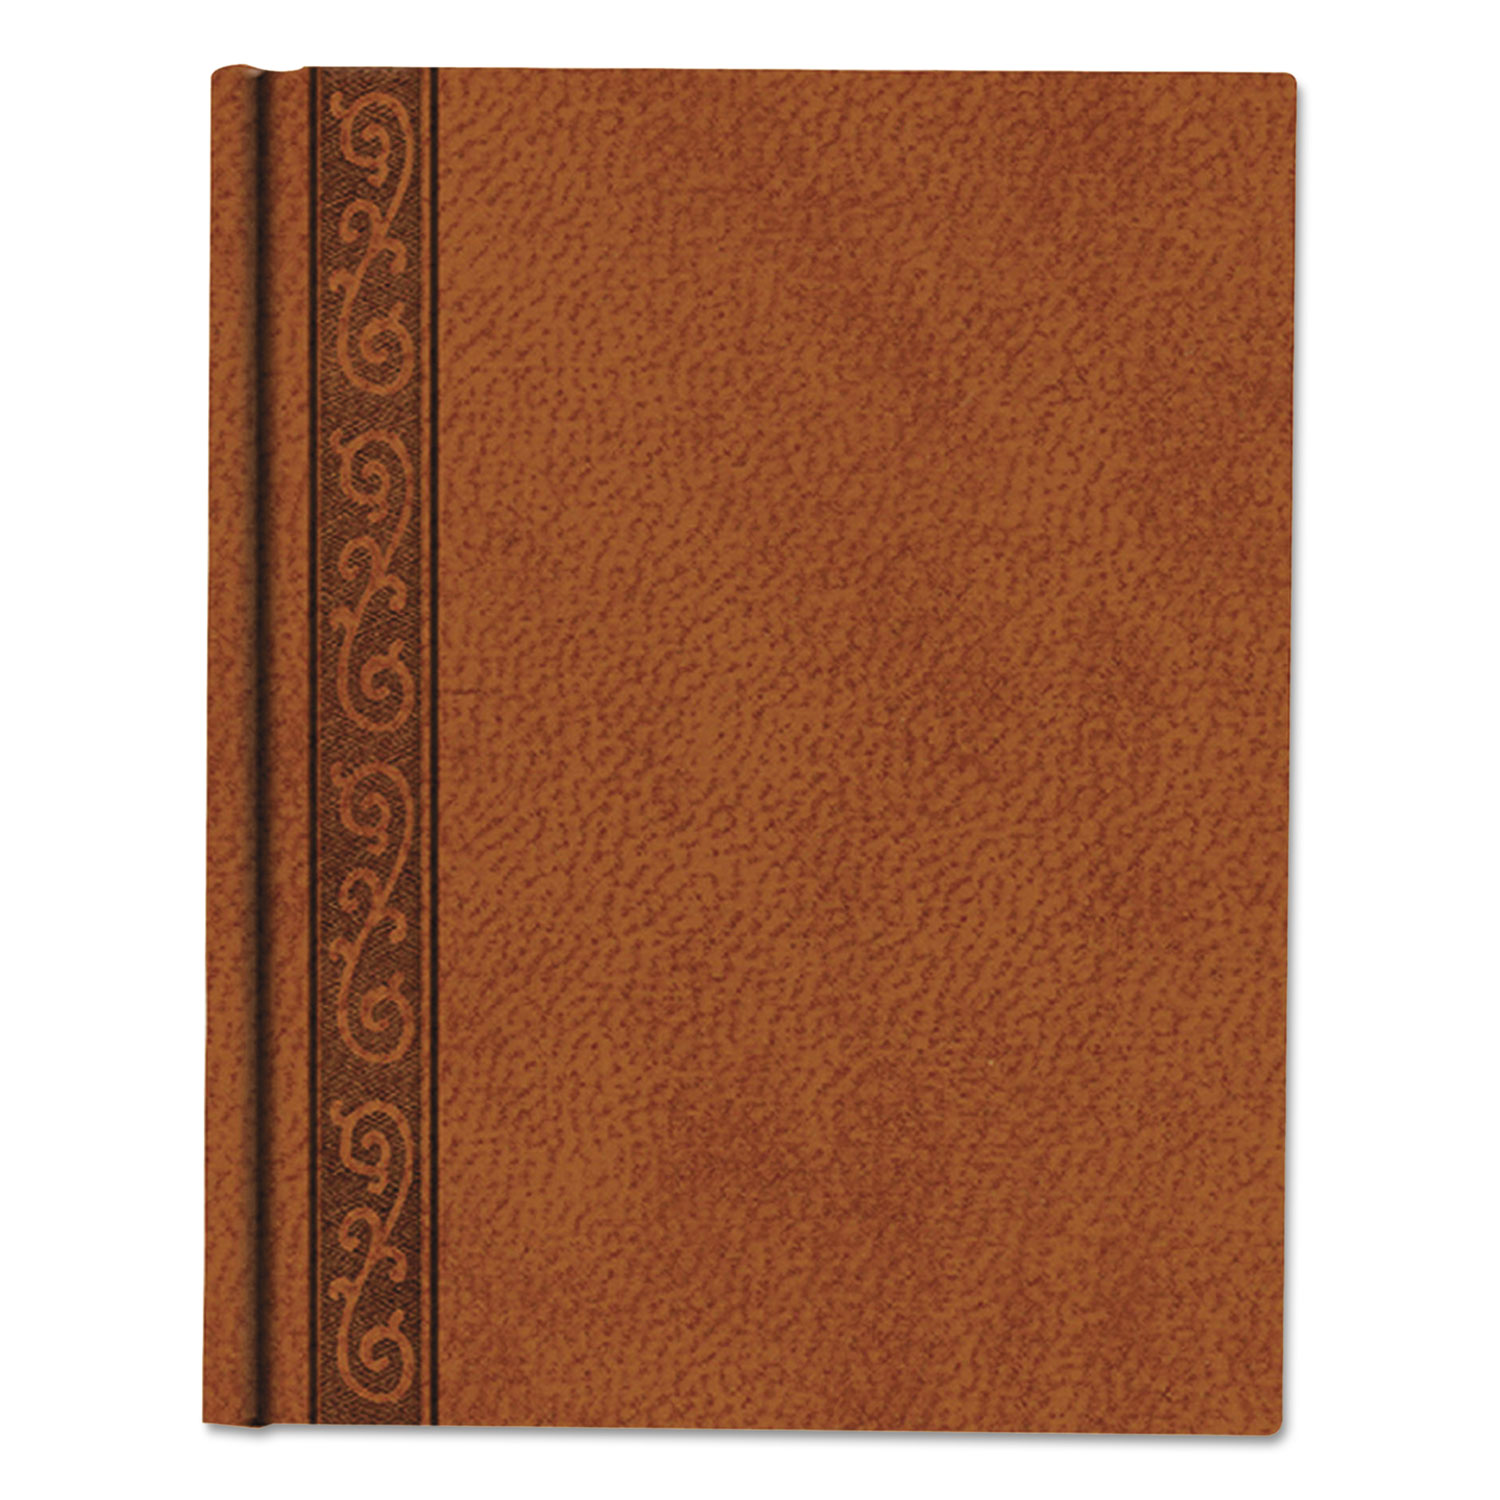  Blueline A8005 Da Vinci Notebook, 1 Subject, Medium/College Rule, Tan Cover, 9.25 x 7.25, 75 Sheets (REDA8005) 